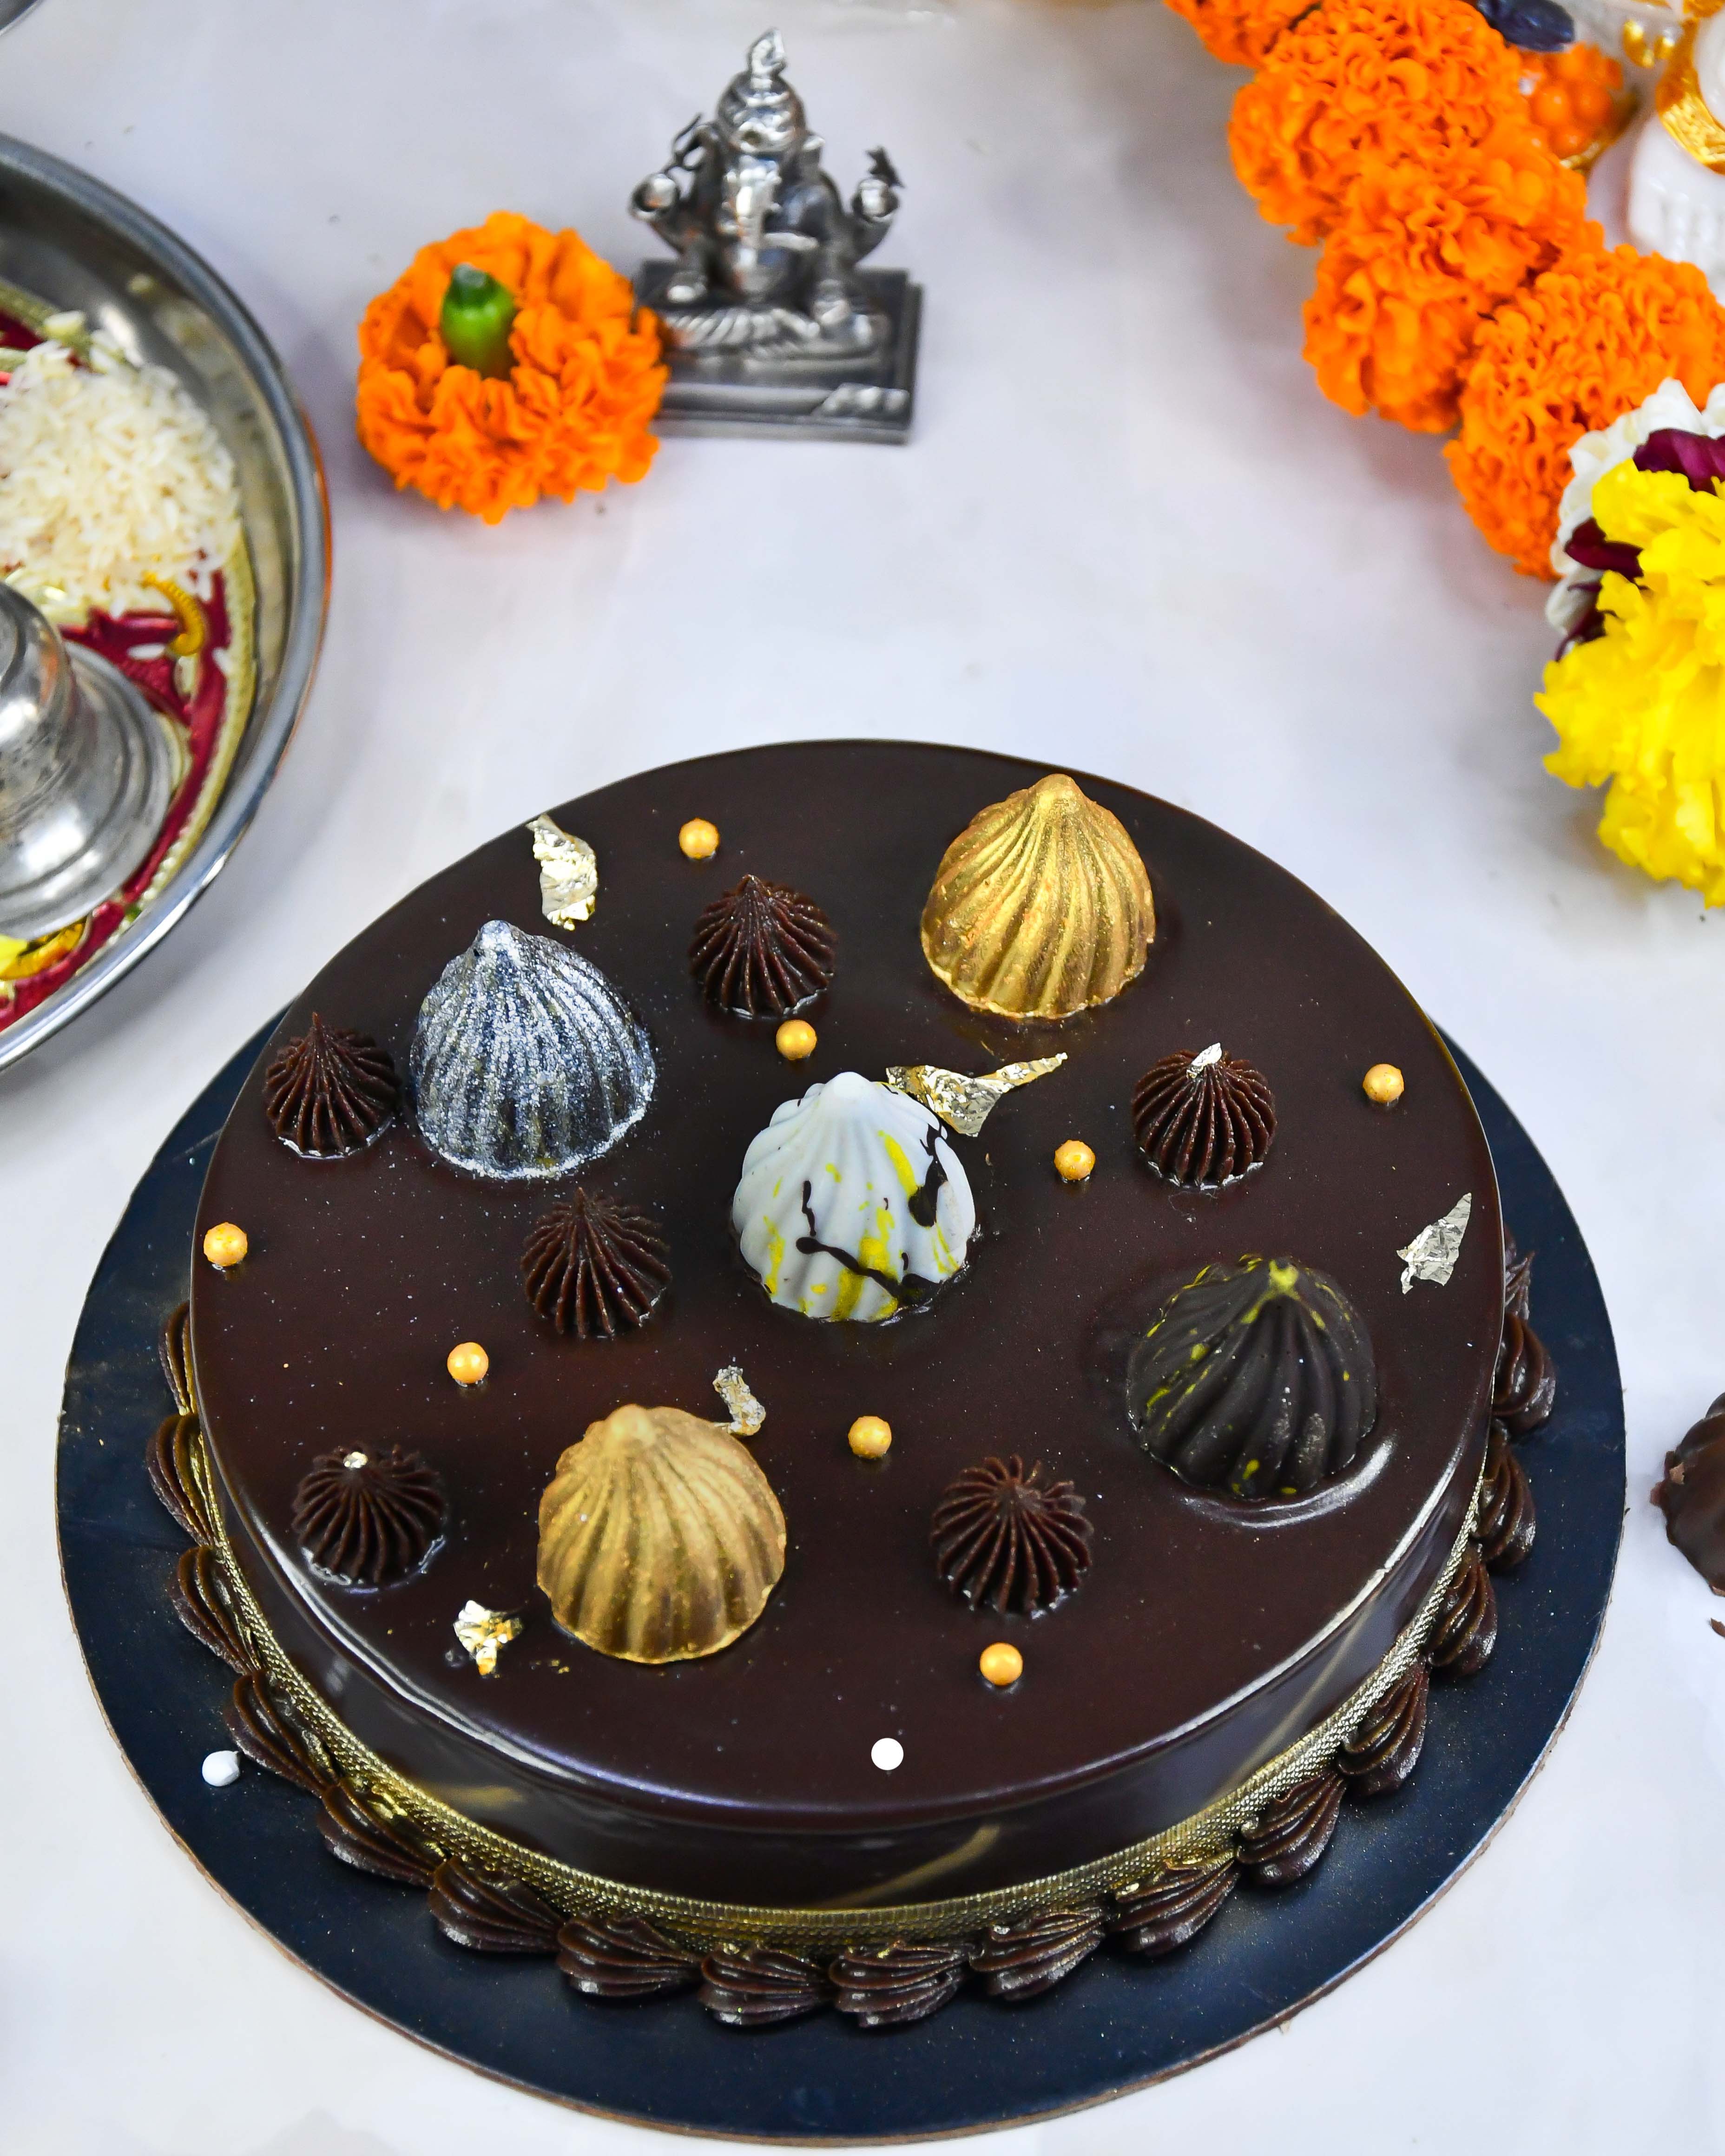 From chocolate ganache to puran poli, 3 Mumbai chefs share their modak  recipes | Condé Nast Traveller India